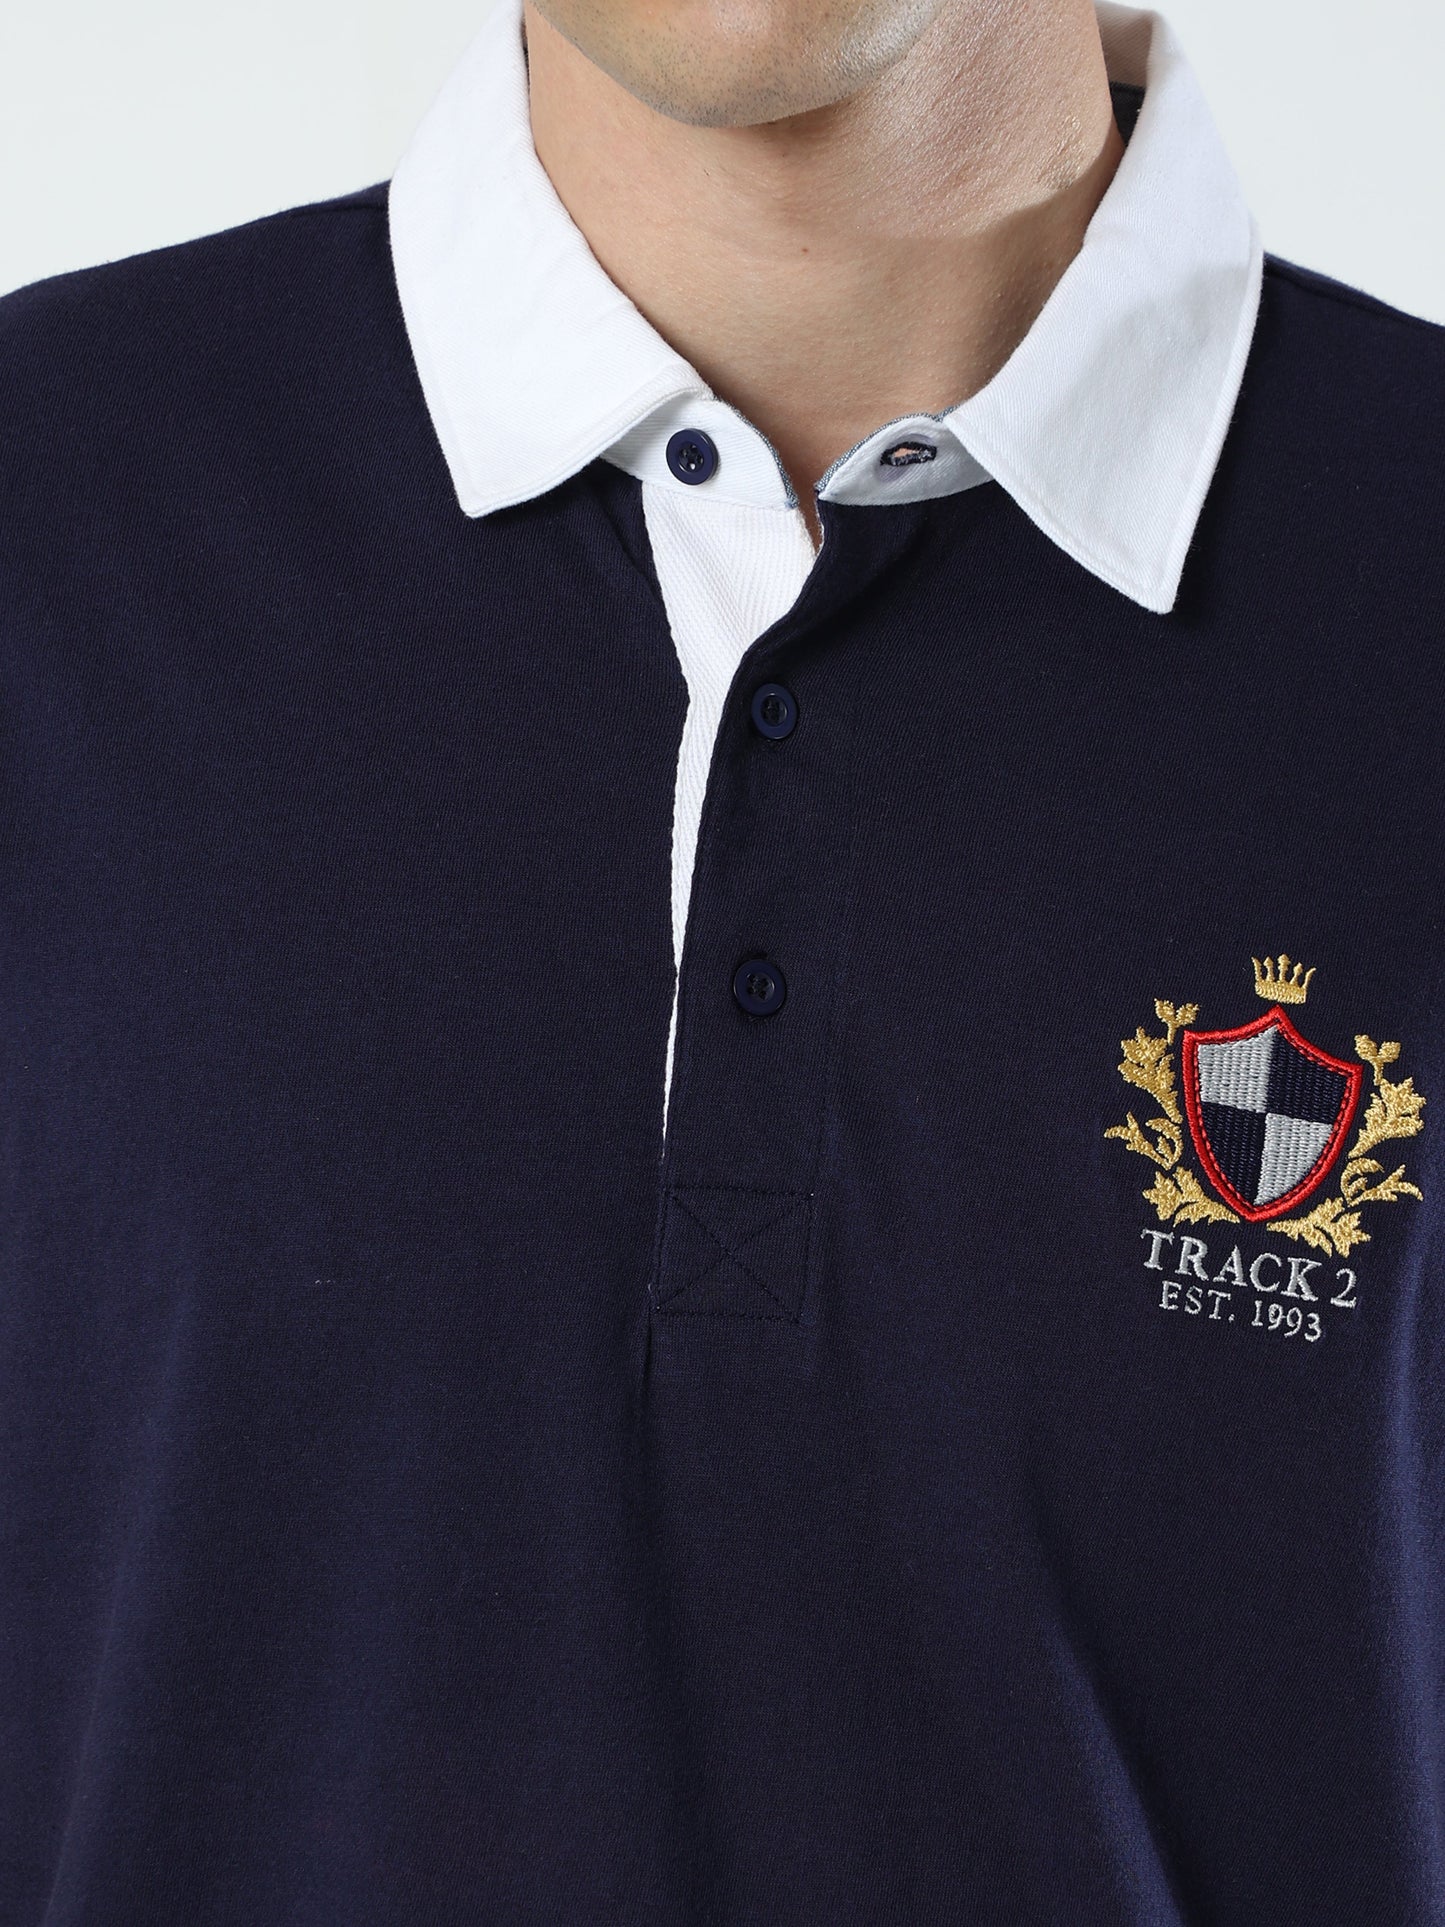 Classic Men's Collared T-Shirt - Navy